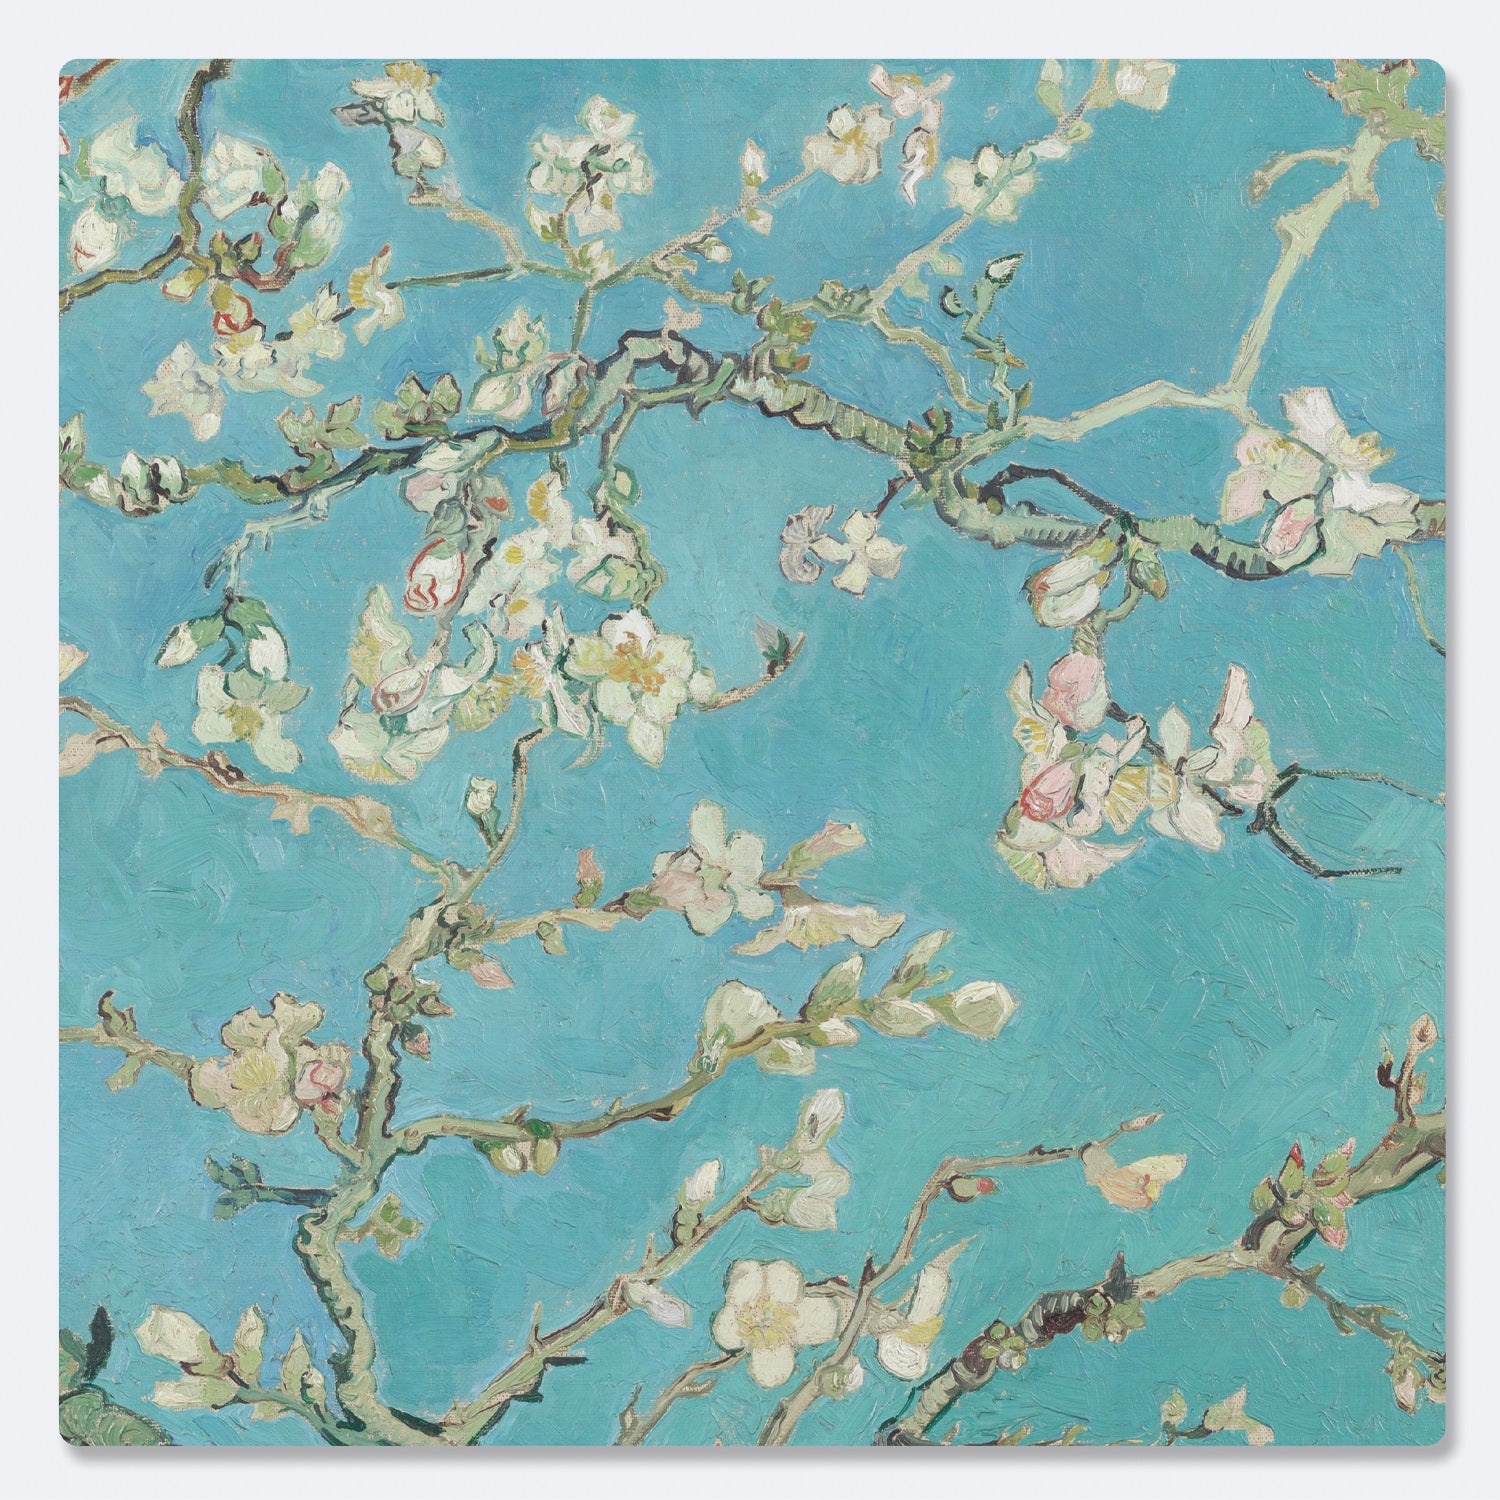 van Gogh Almond Blossom Ceramic Trivet